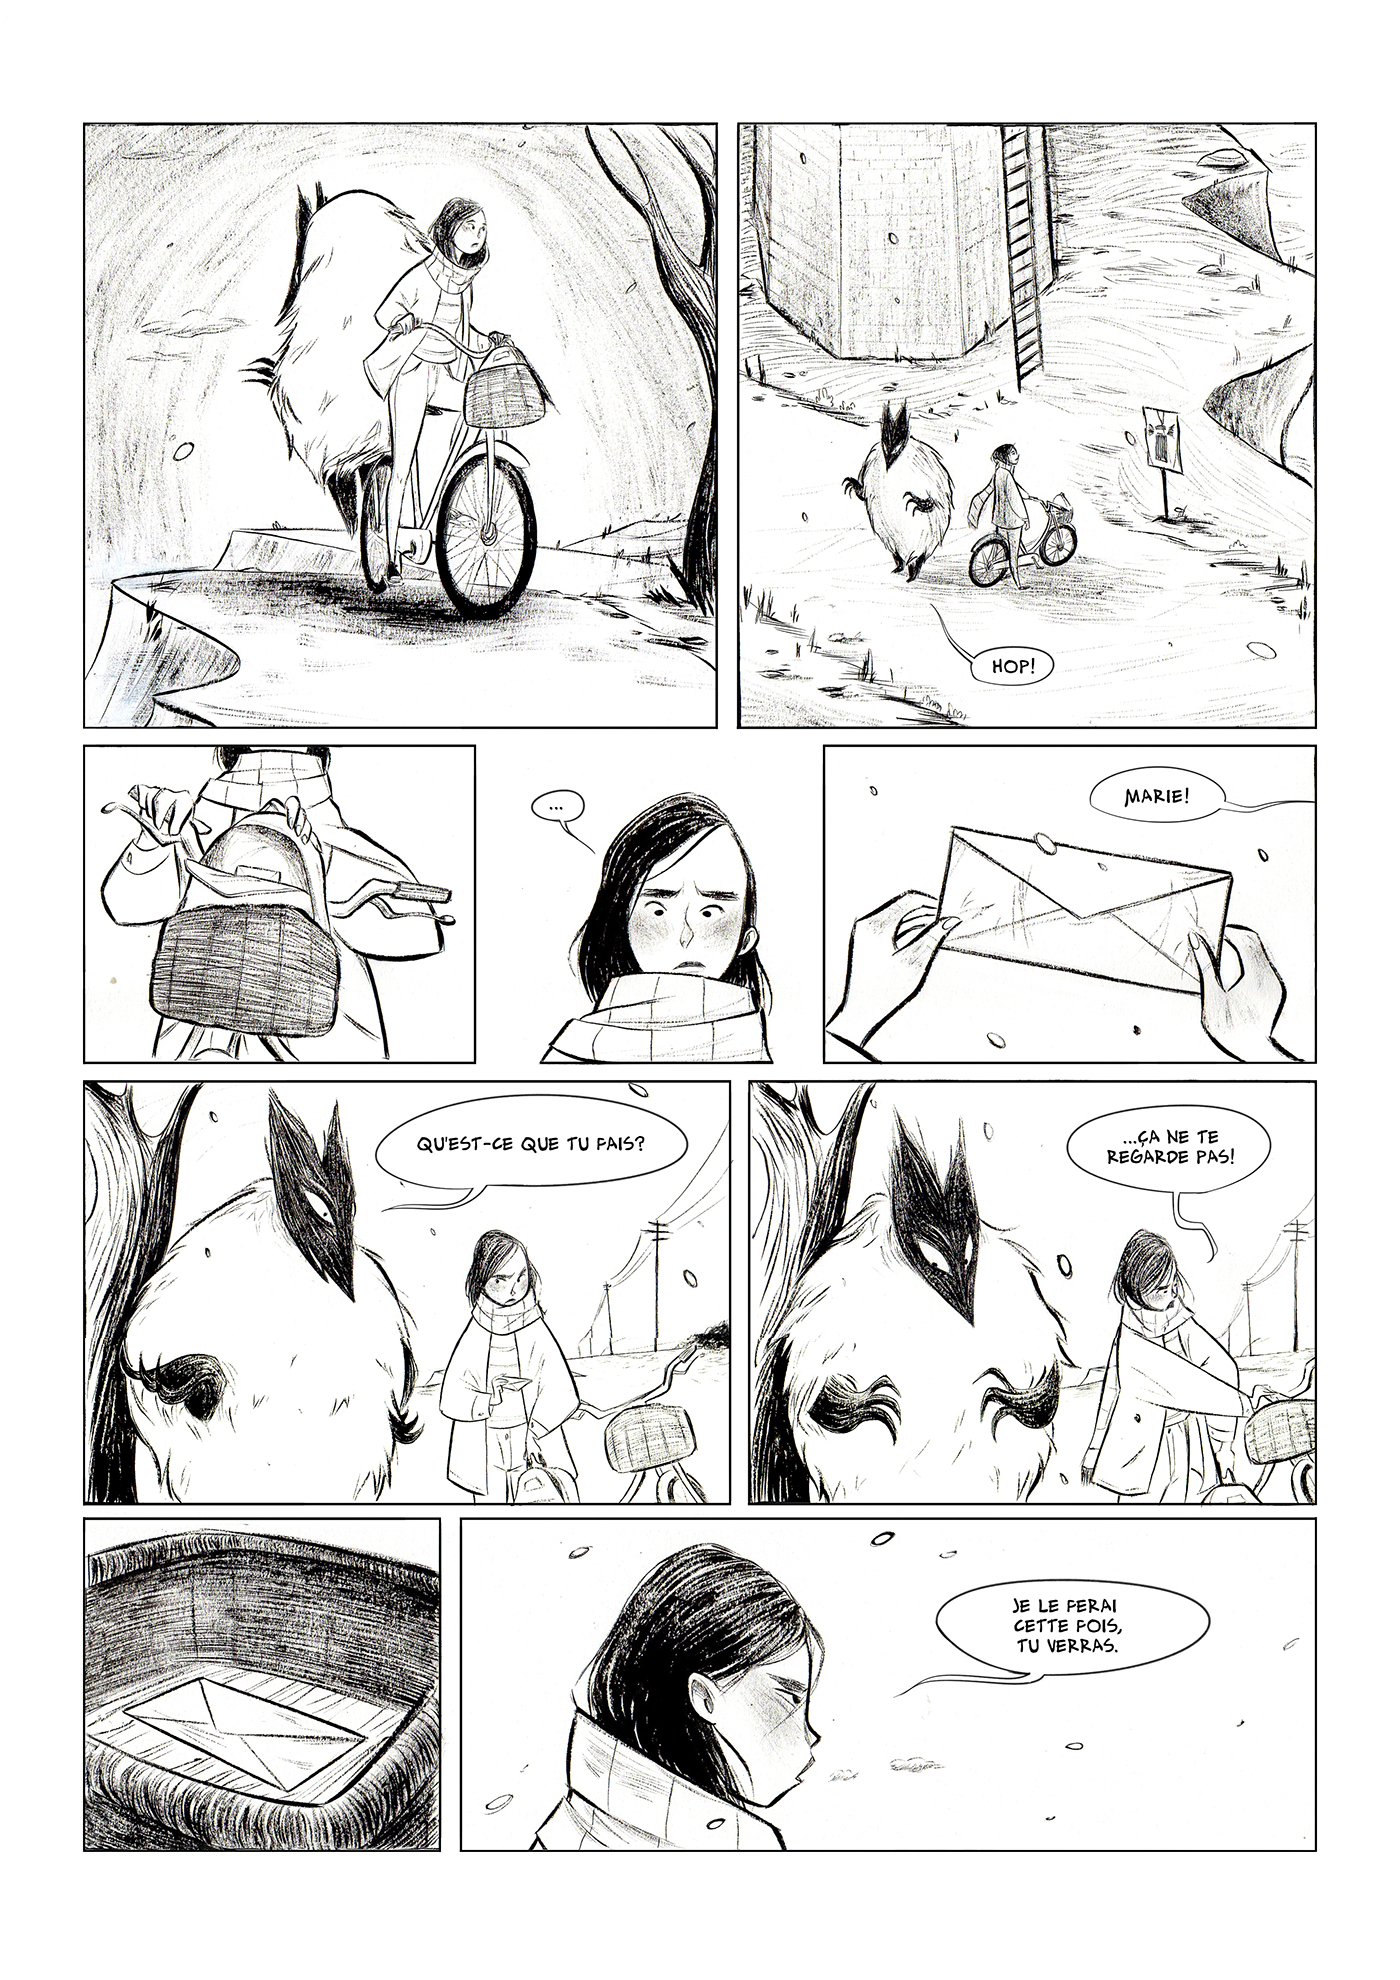 monstre monster story comics fumetto girls sad art